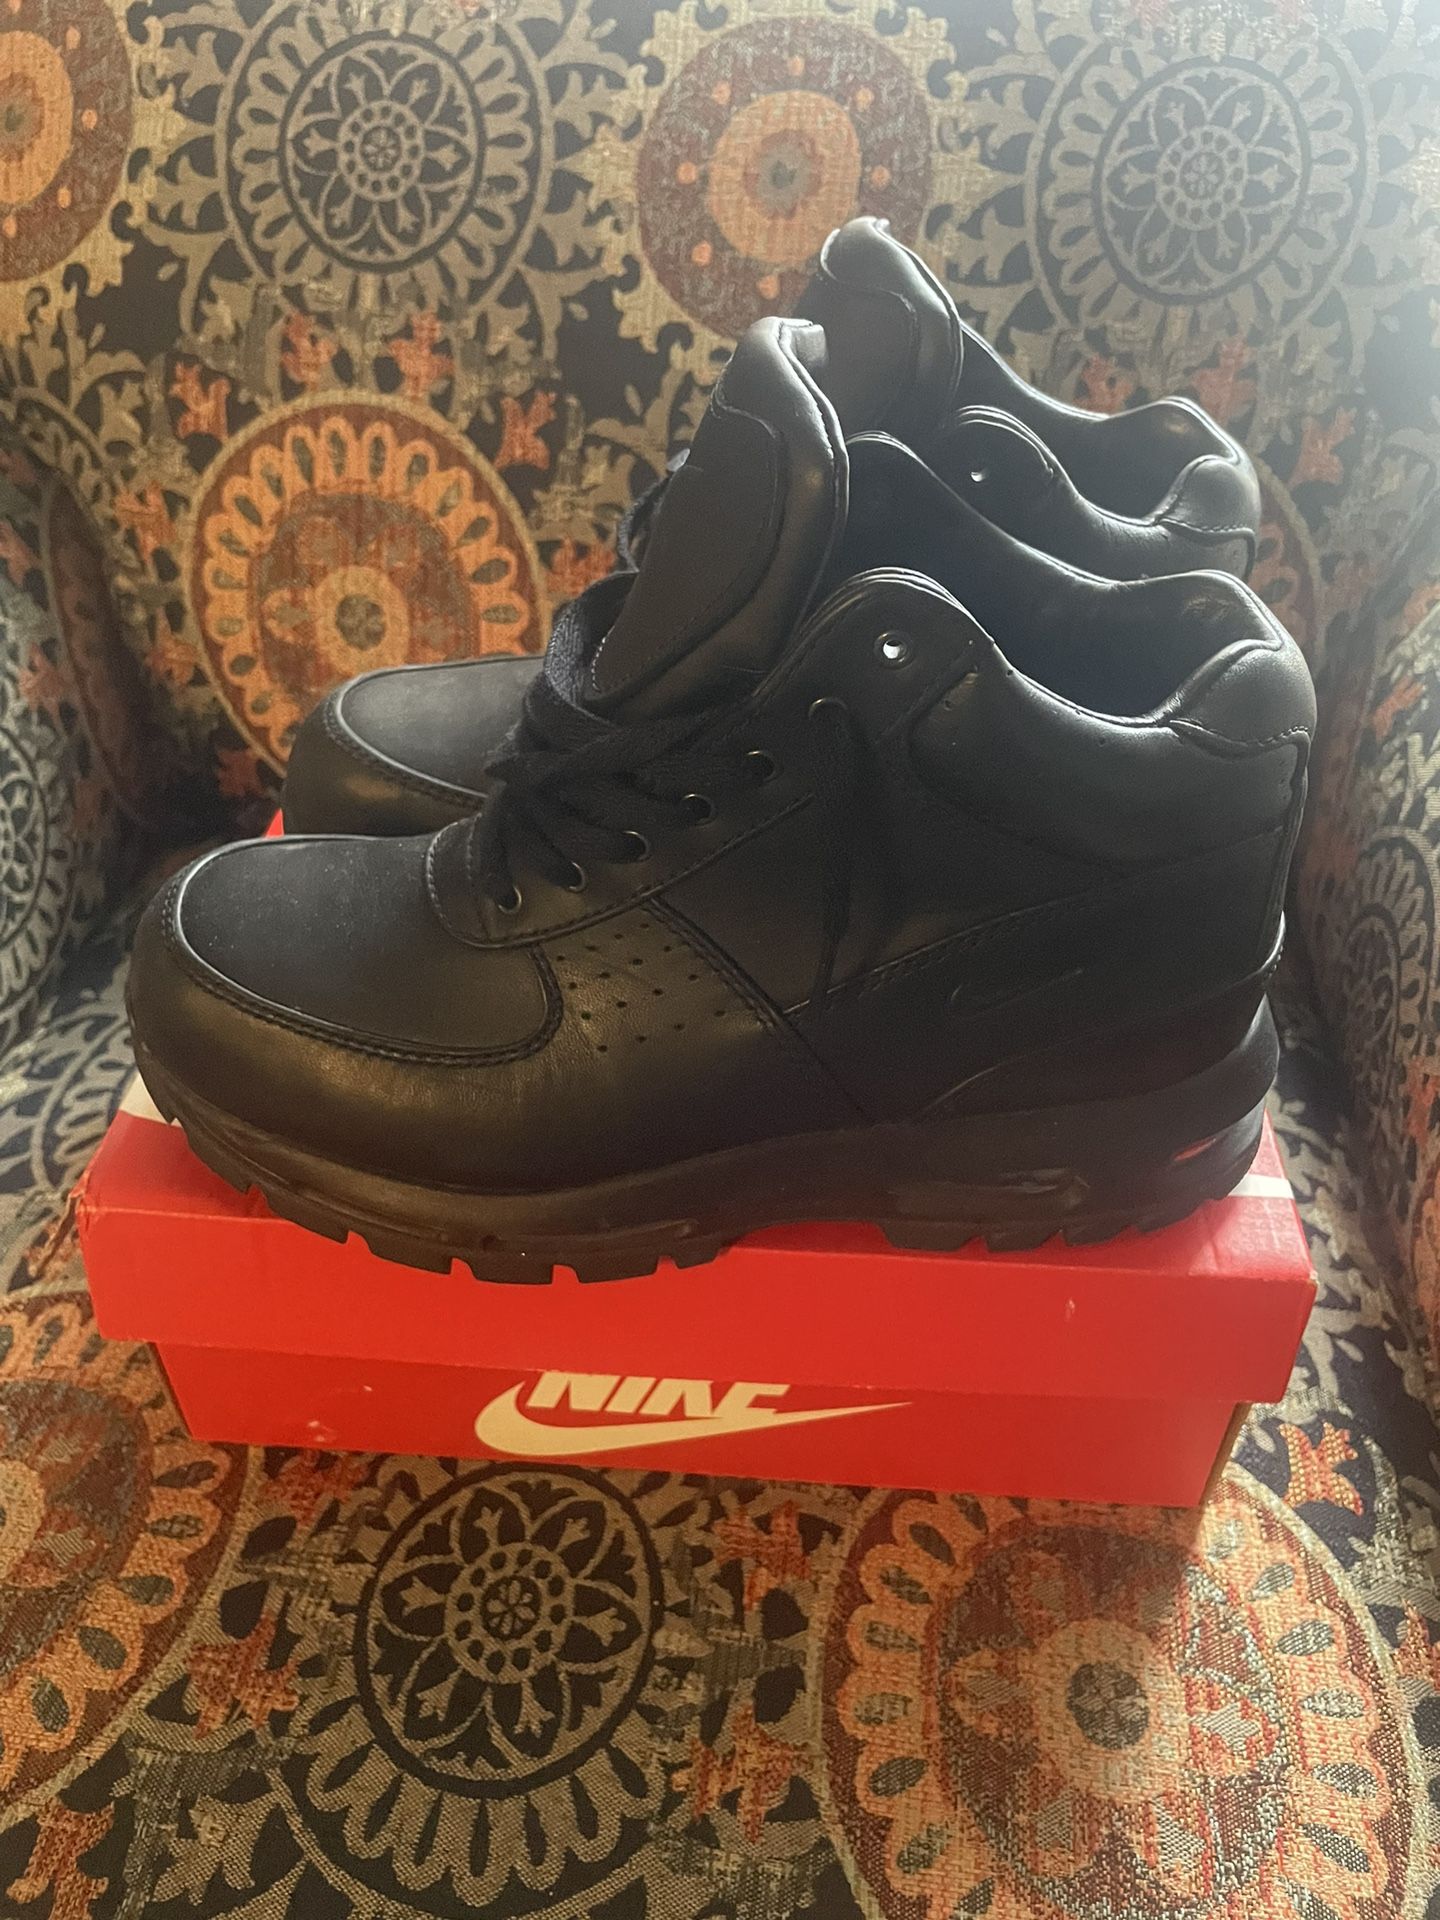 Nike Acg Boots Size 8 Men’s 